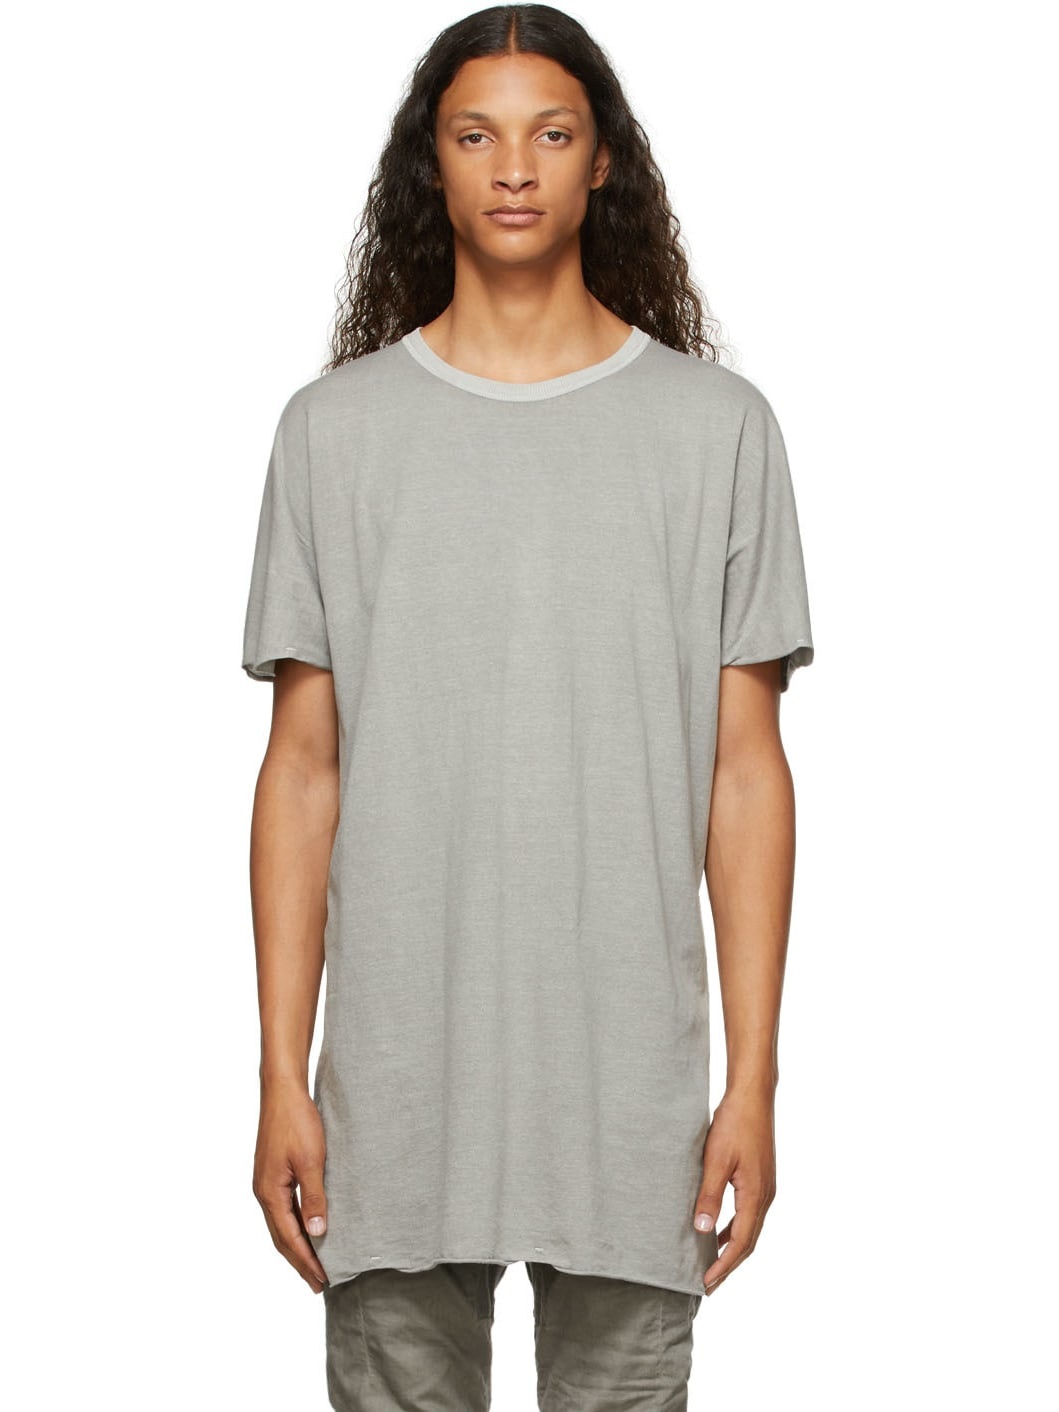 Grey Garment-Dyed One-Piece T-Shirt - 1